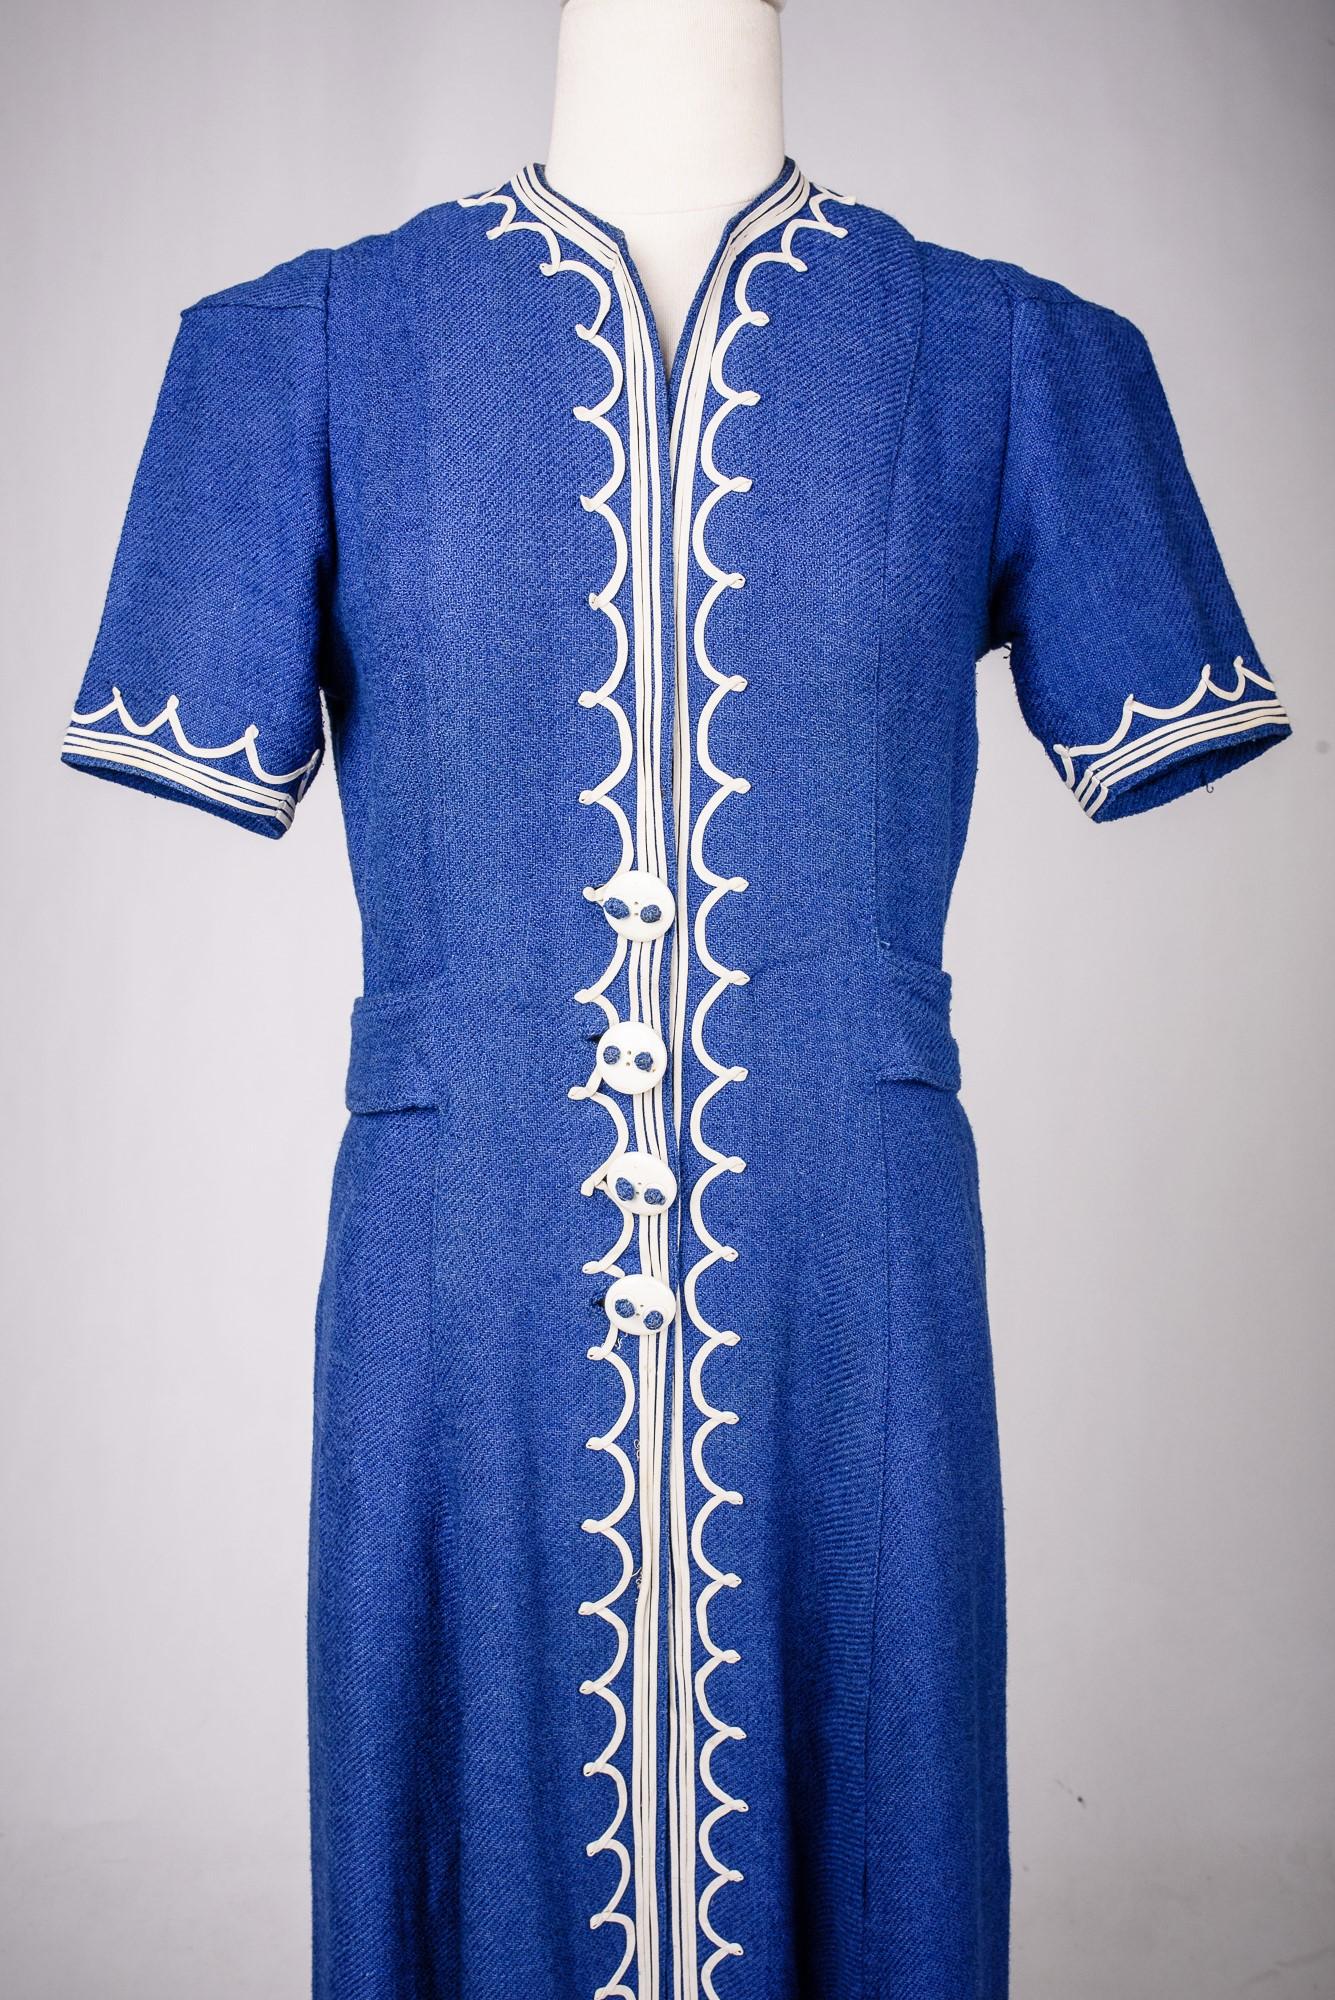 Circa 1945-1950
France
Elegant dress 